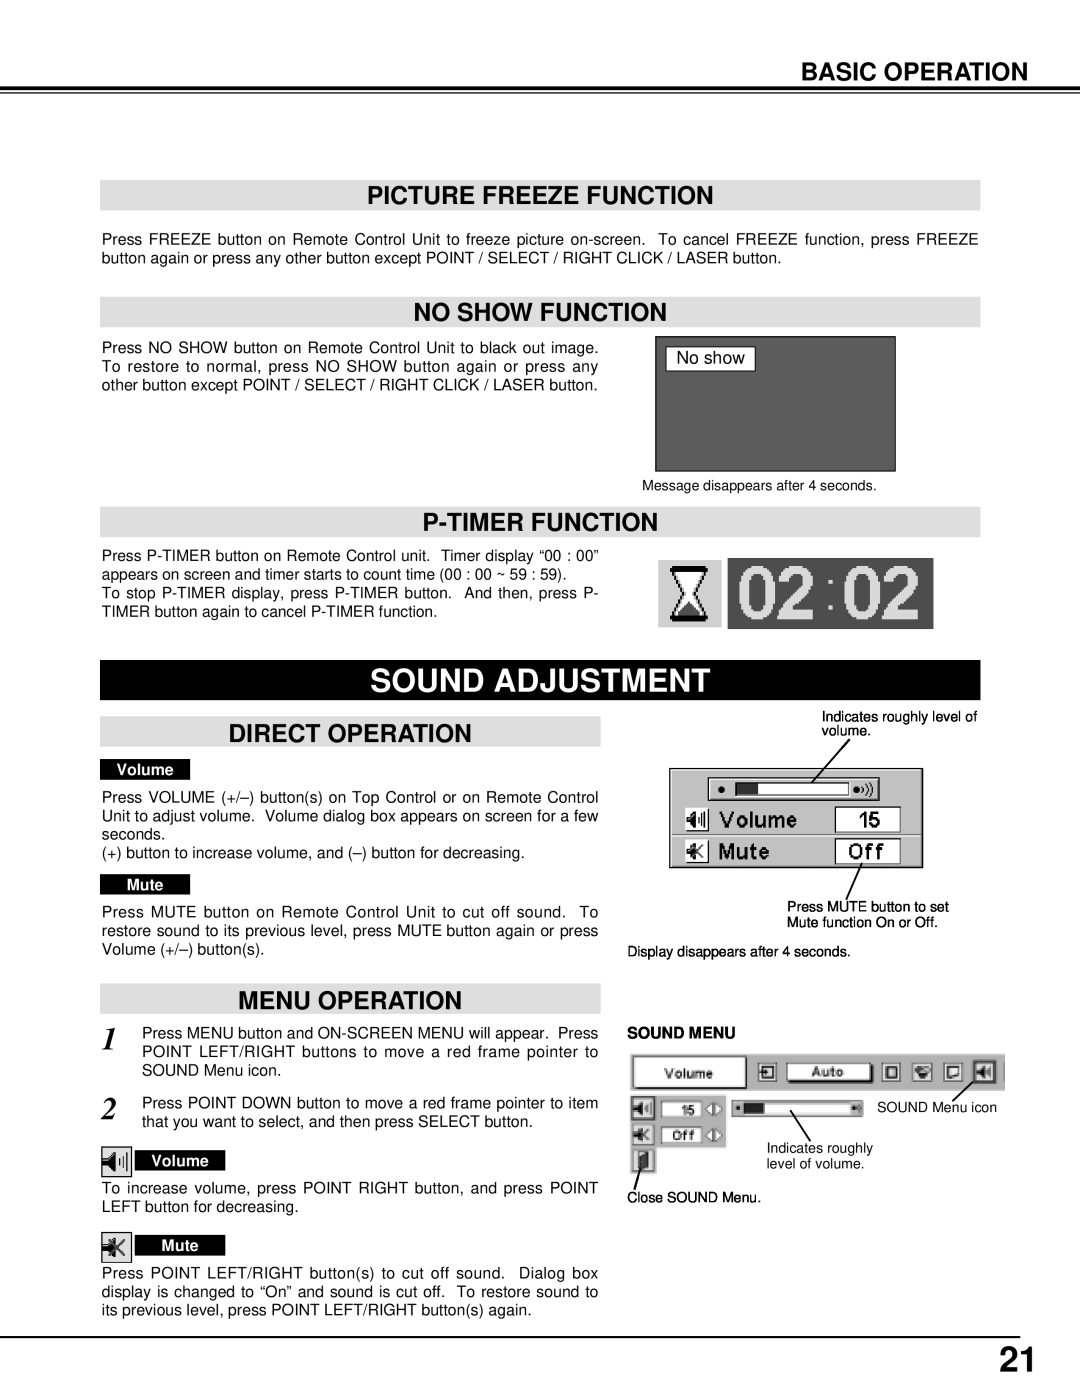 BOXLIGHT MP-42T Sound Adjustment, Basic Operation Picture Freeze Function, No Show Function, P-Timer Function, Sound Menu 